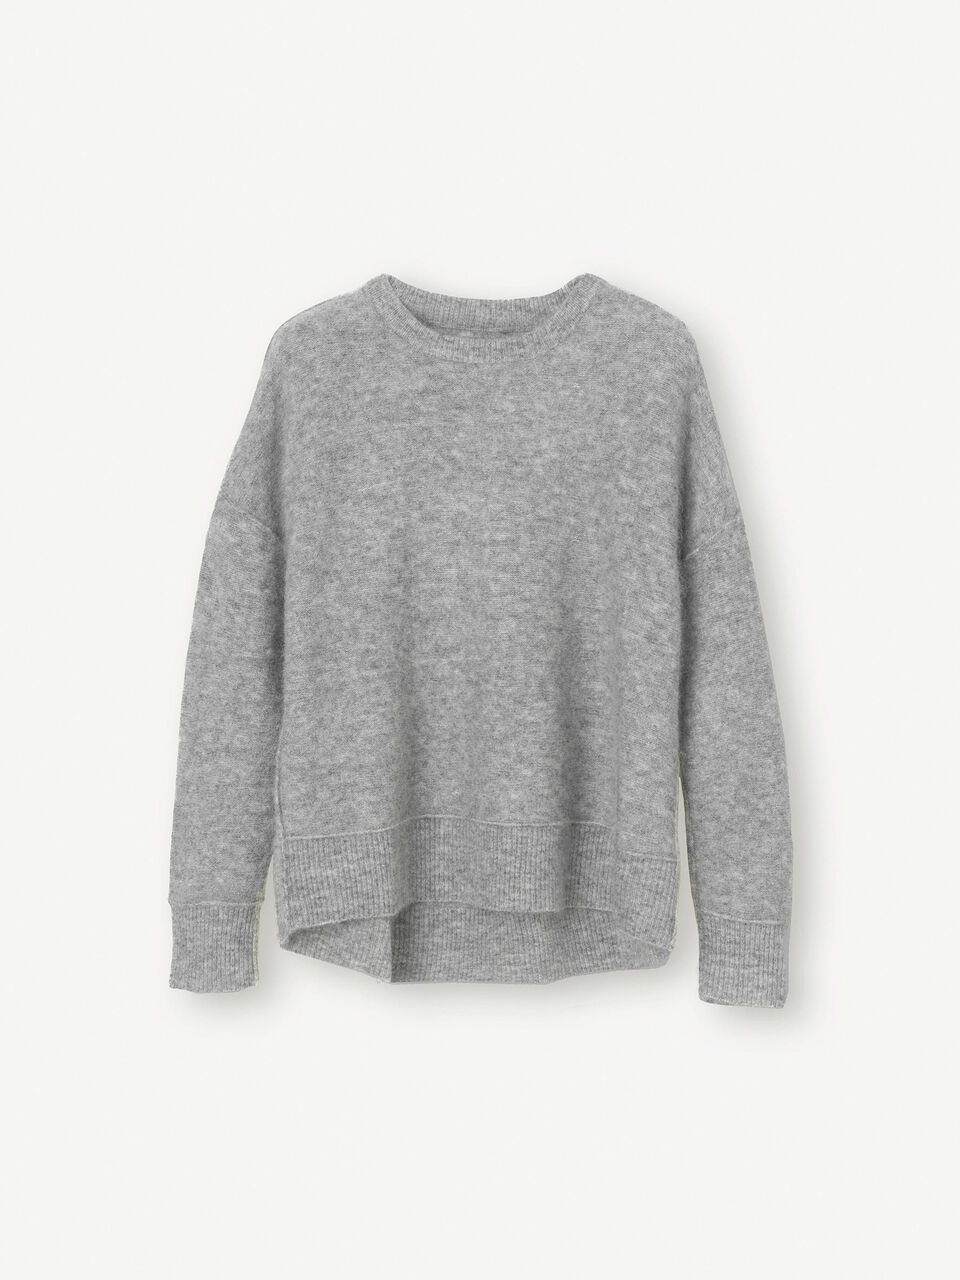 Biagio sweater - Buy Clothing